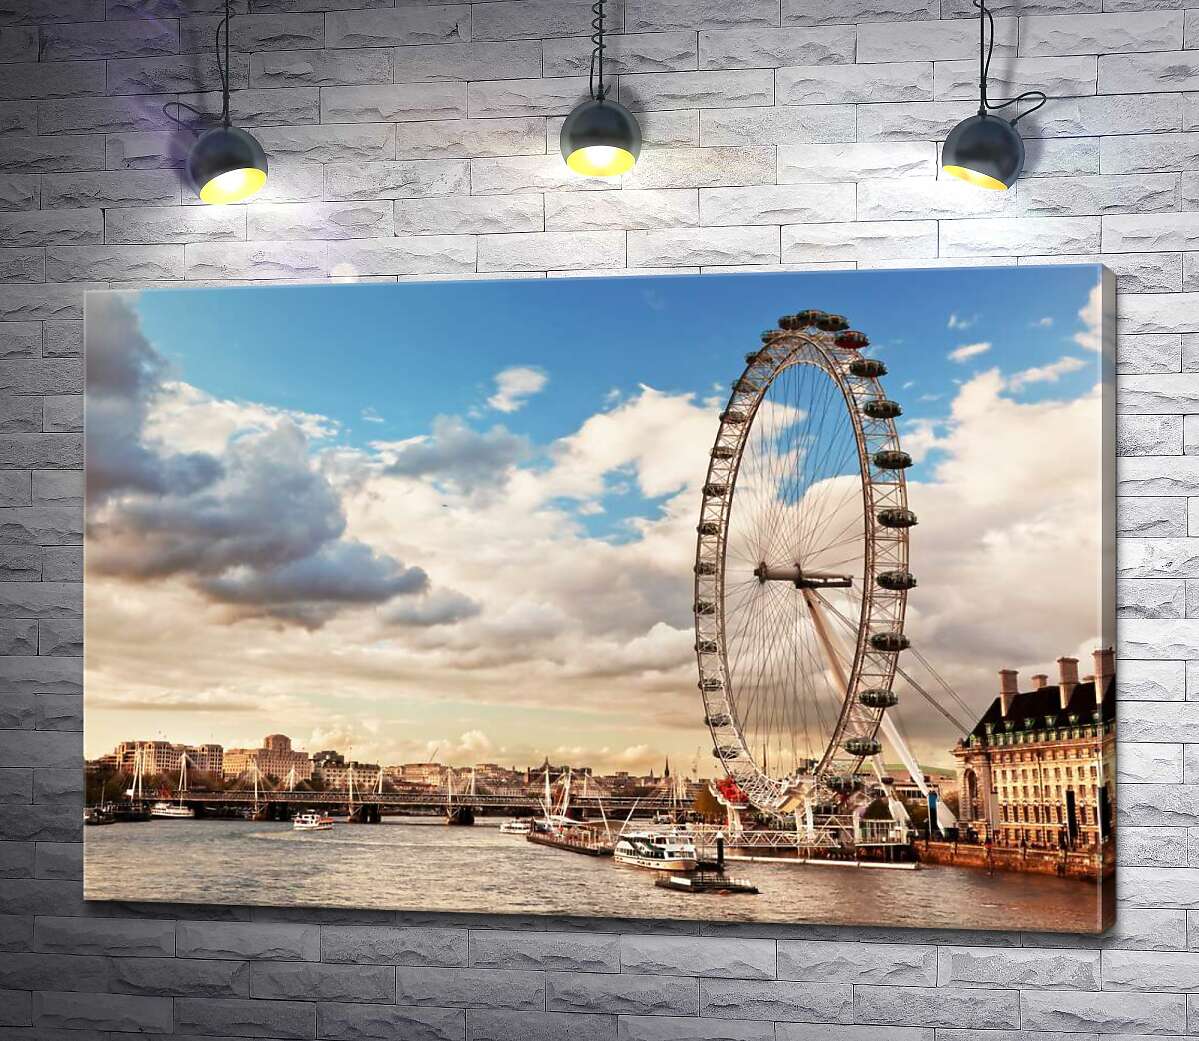 картина Колесо огляду "Лондонське око" (London eye) нависло над водами Темзи